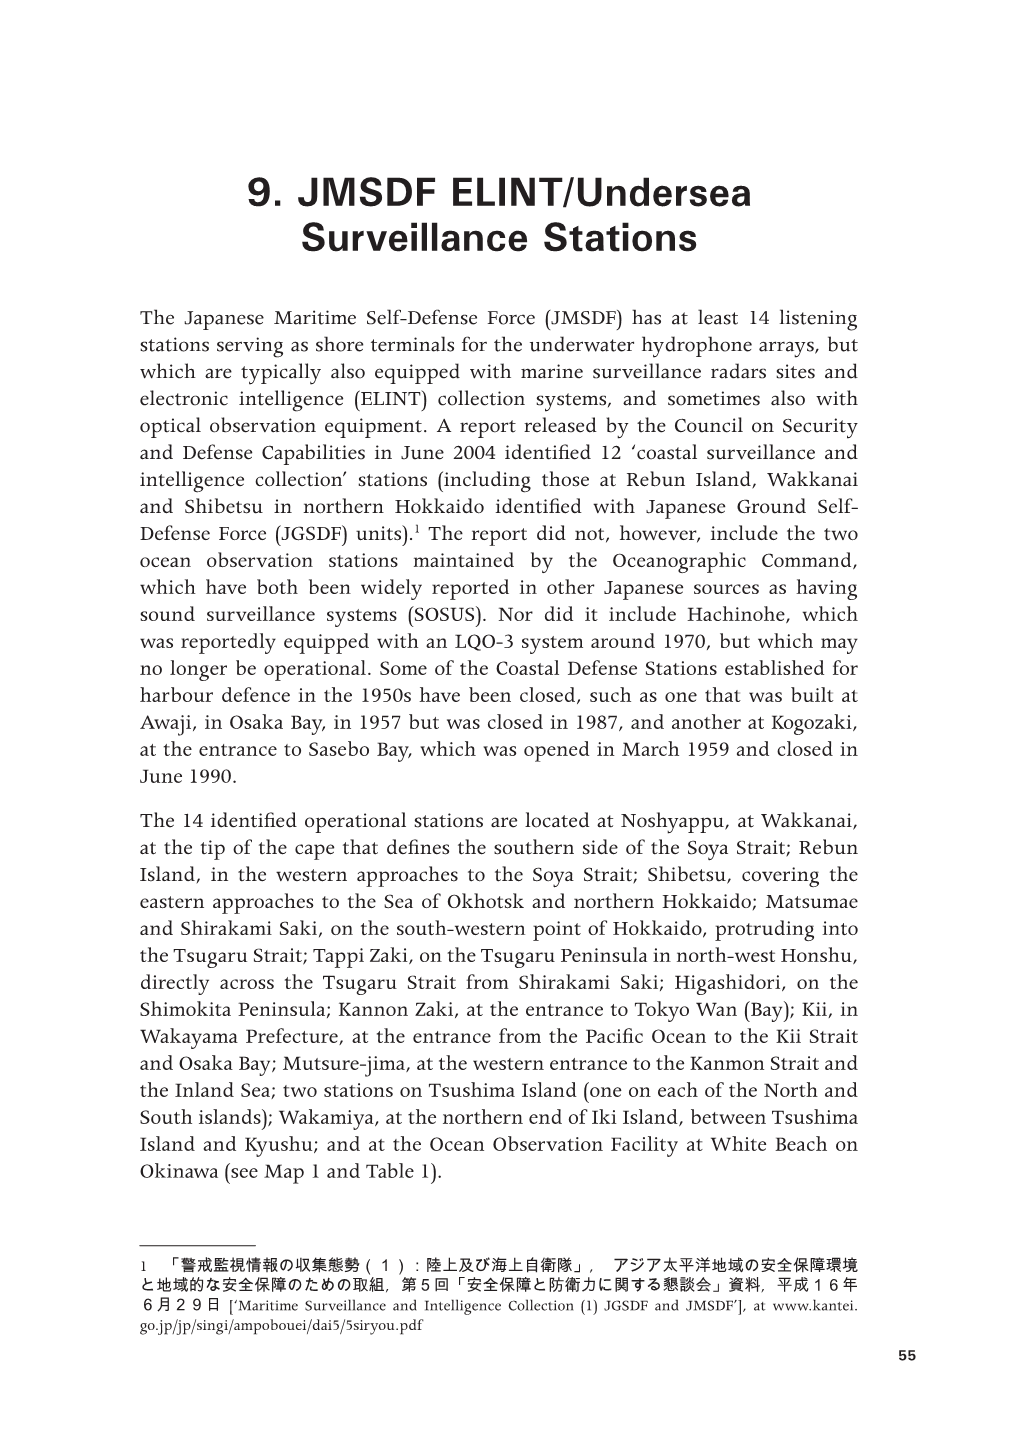 9. JMSDF ELINT/Undersea Surveillance Stations